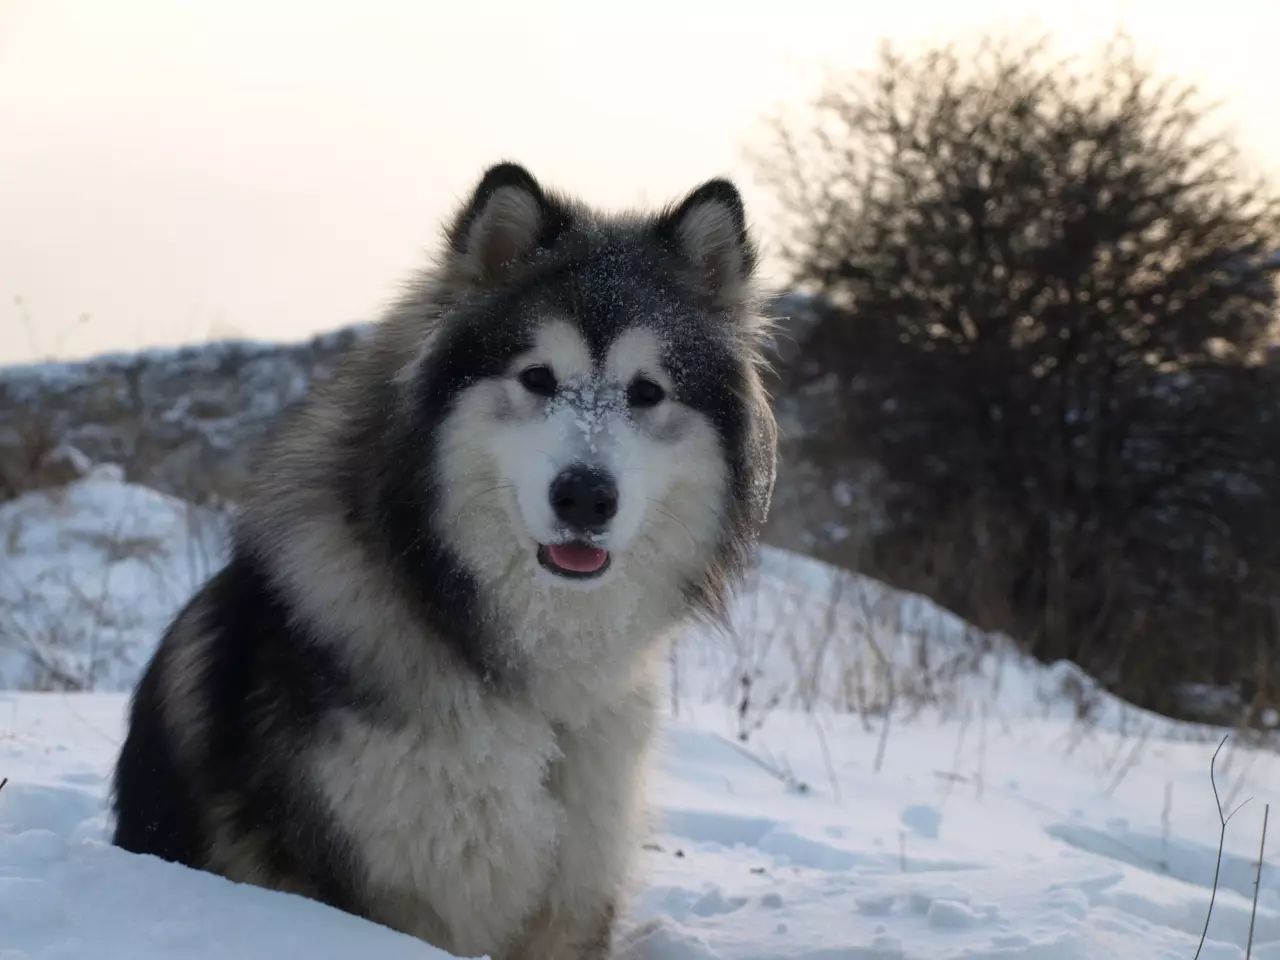 Alaskan Malamute 阿拉斯加雪橇犬——铁汉柔情丨主流狗